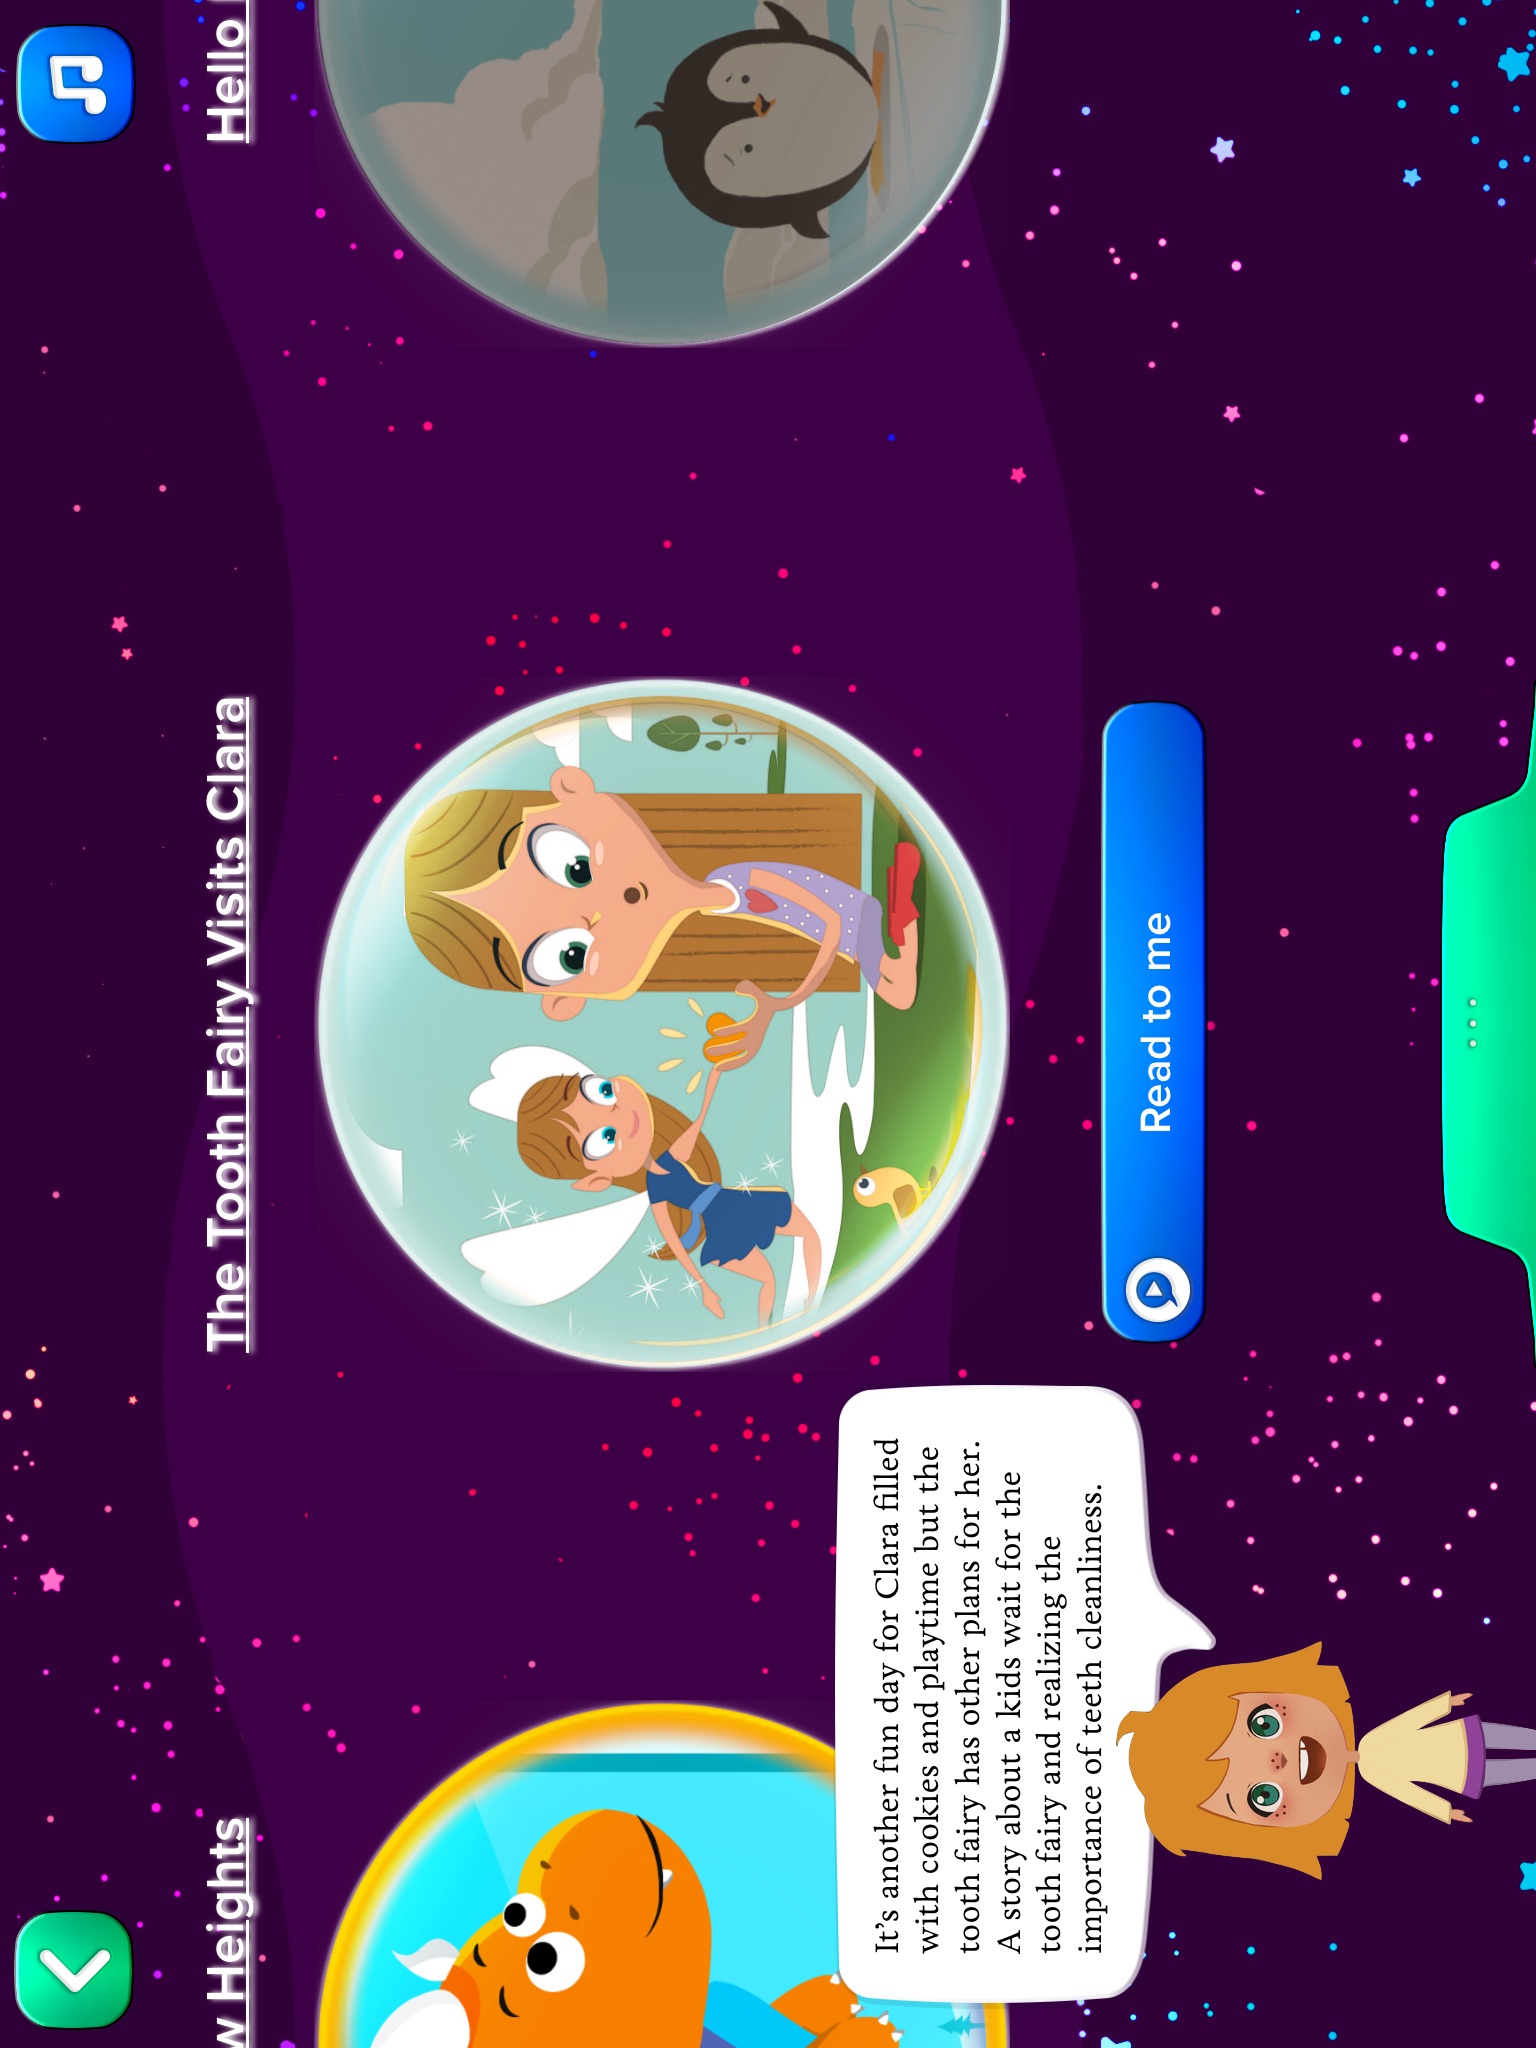 Vuelo - Stories for kids screenshot 3